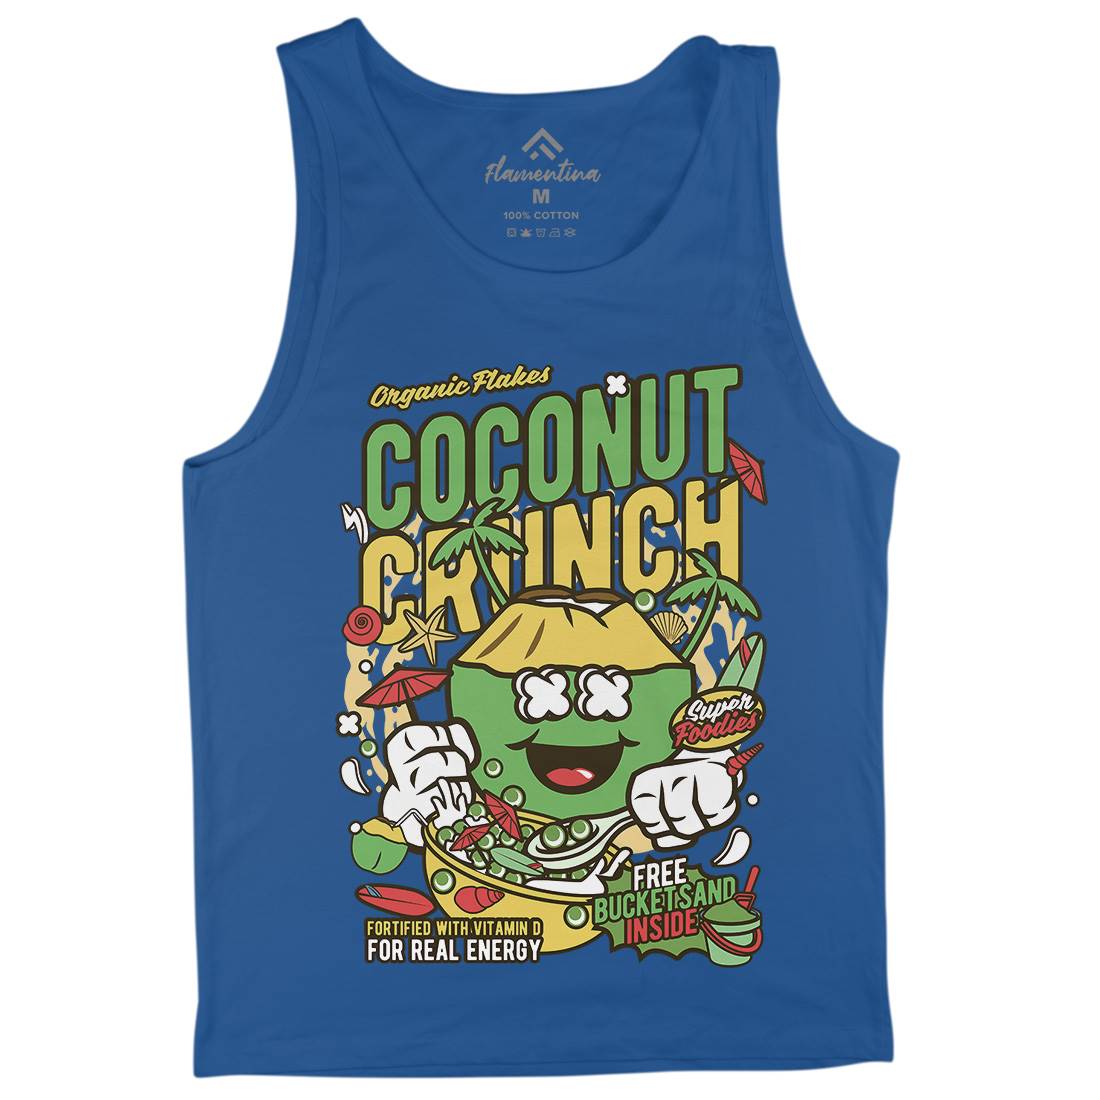 Coconut Crunch Mens Tank Top Vest Food C519